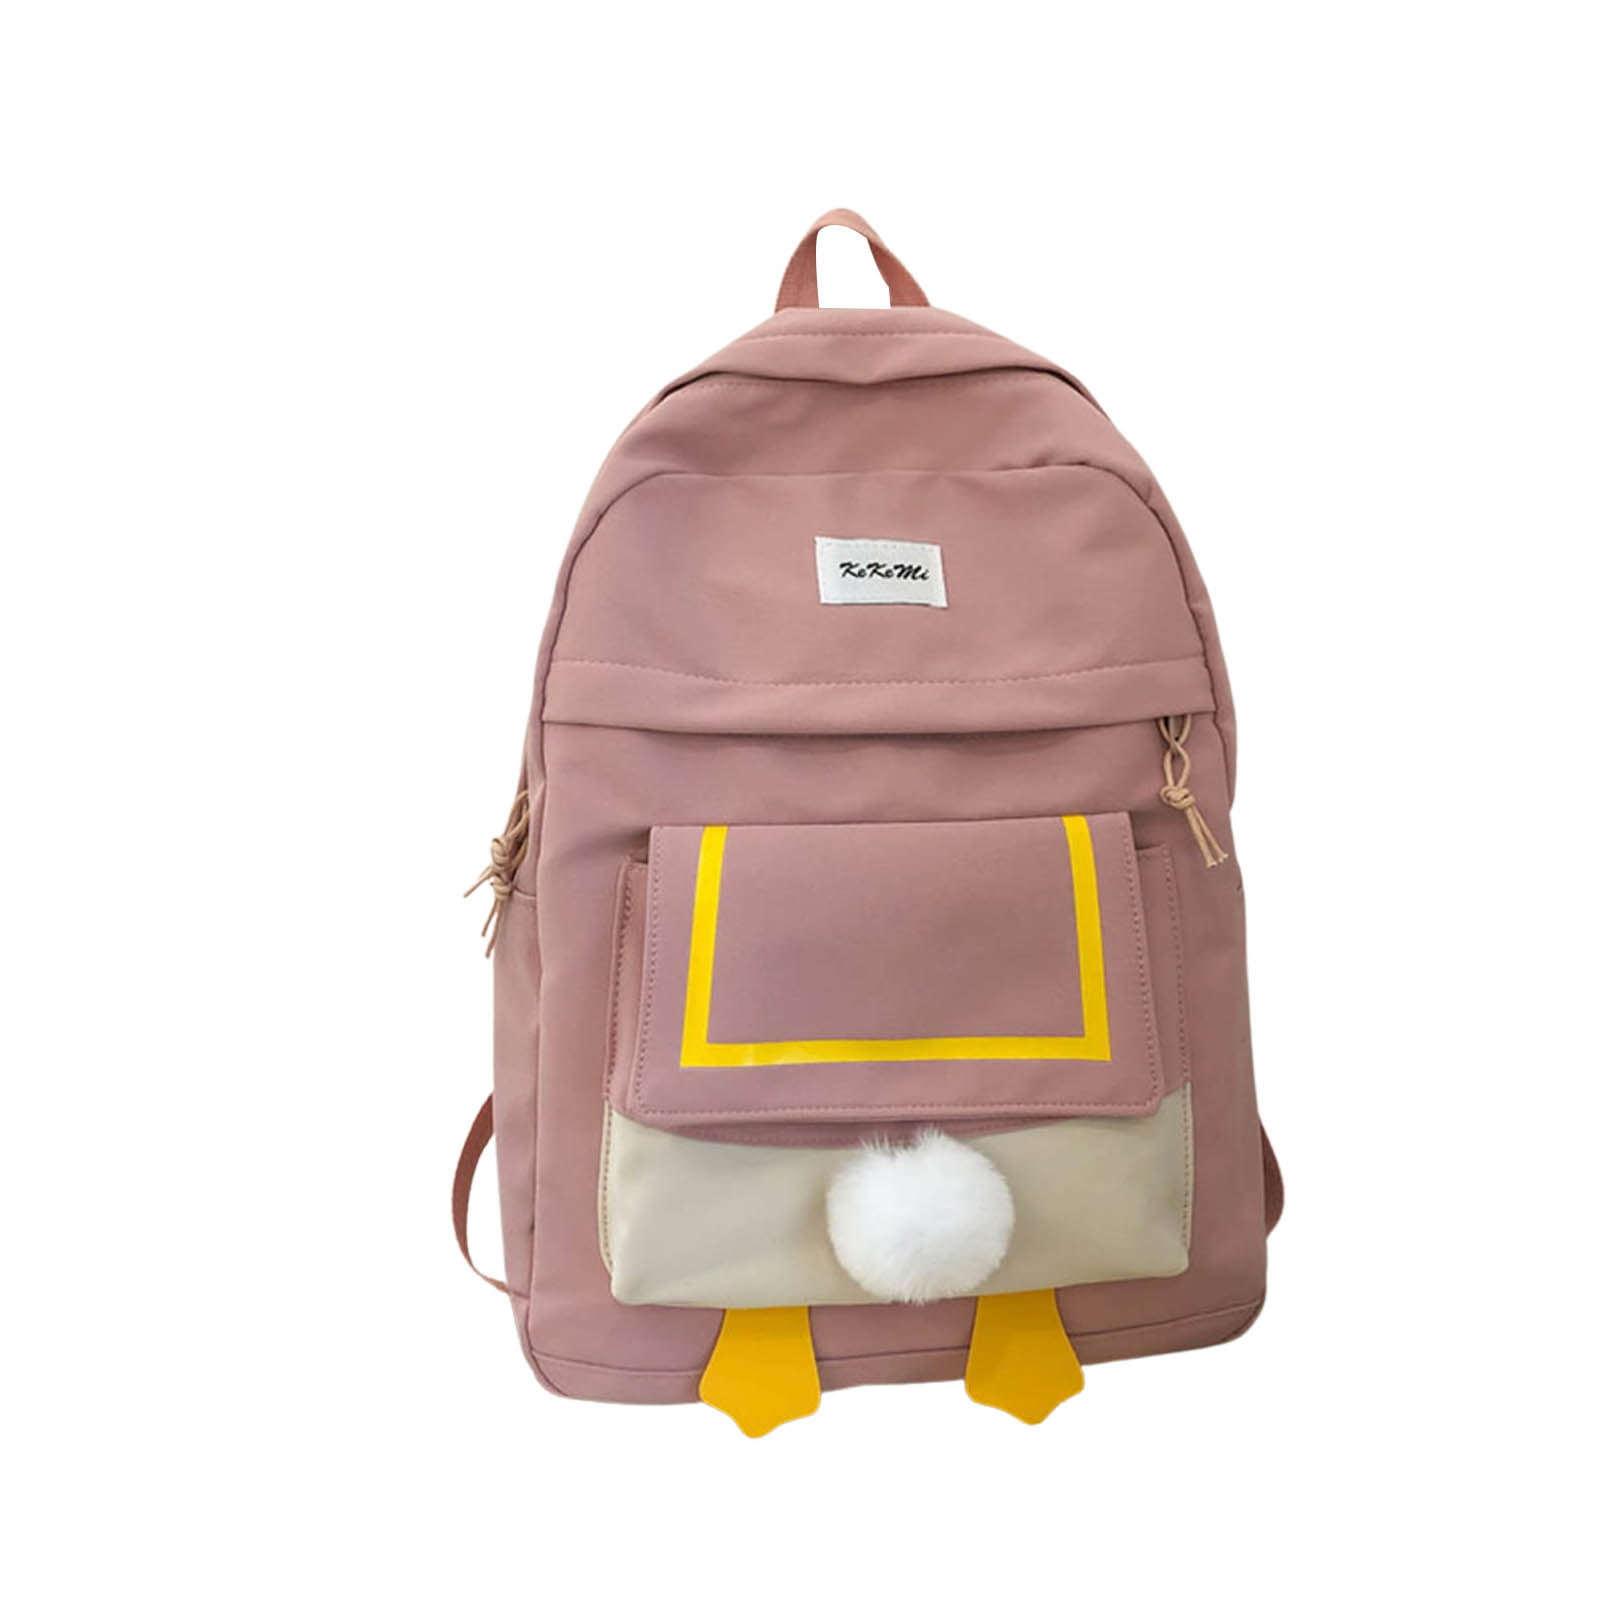 Drawstring Bag Yellow Baby Rubber Duck Lightweight Daypack for Teens Boys Girls with Zipper Mesh Pockets 